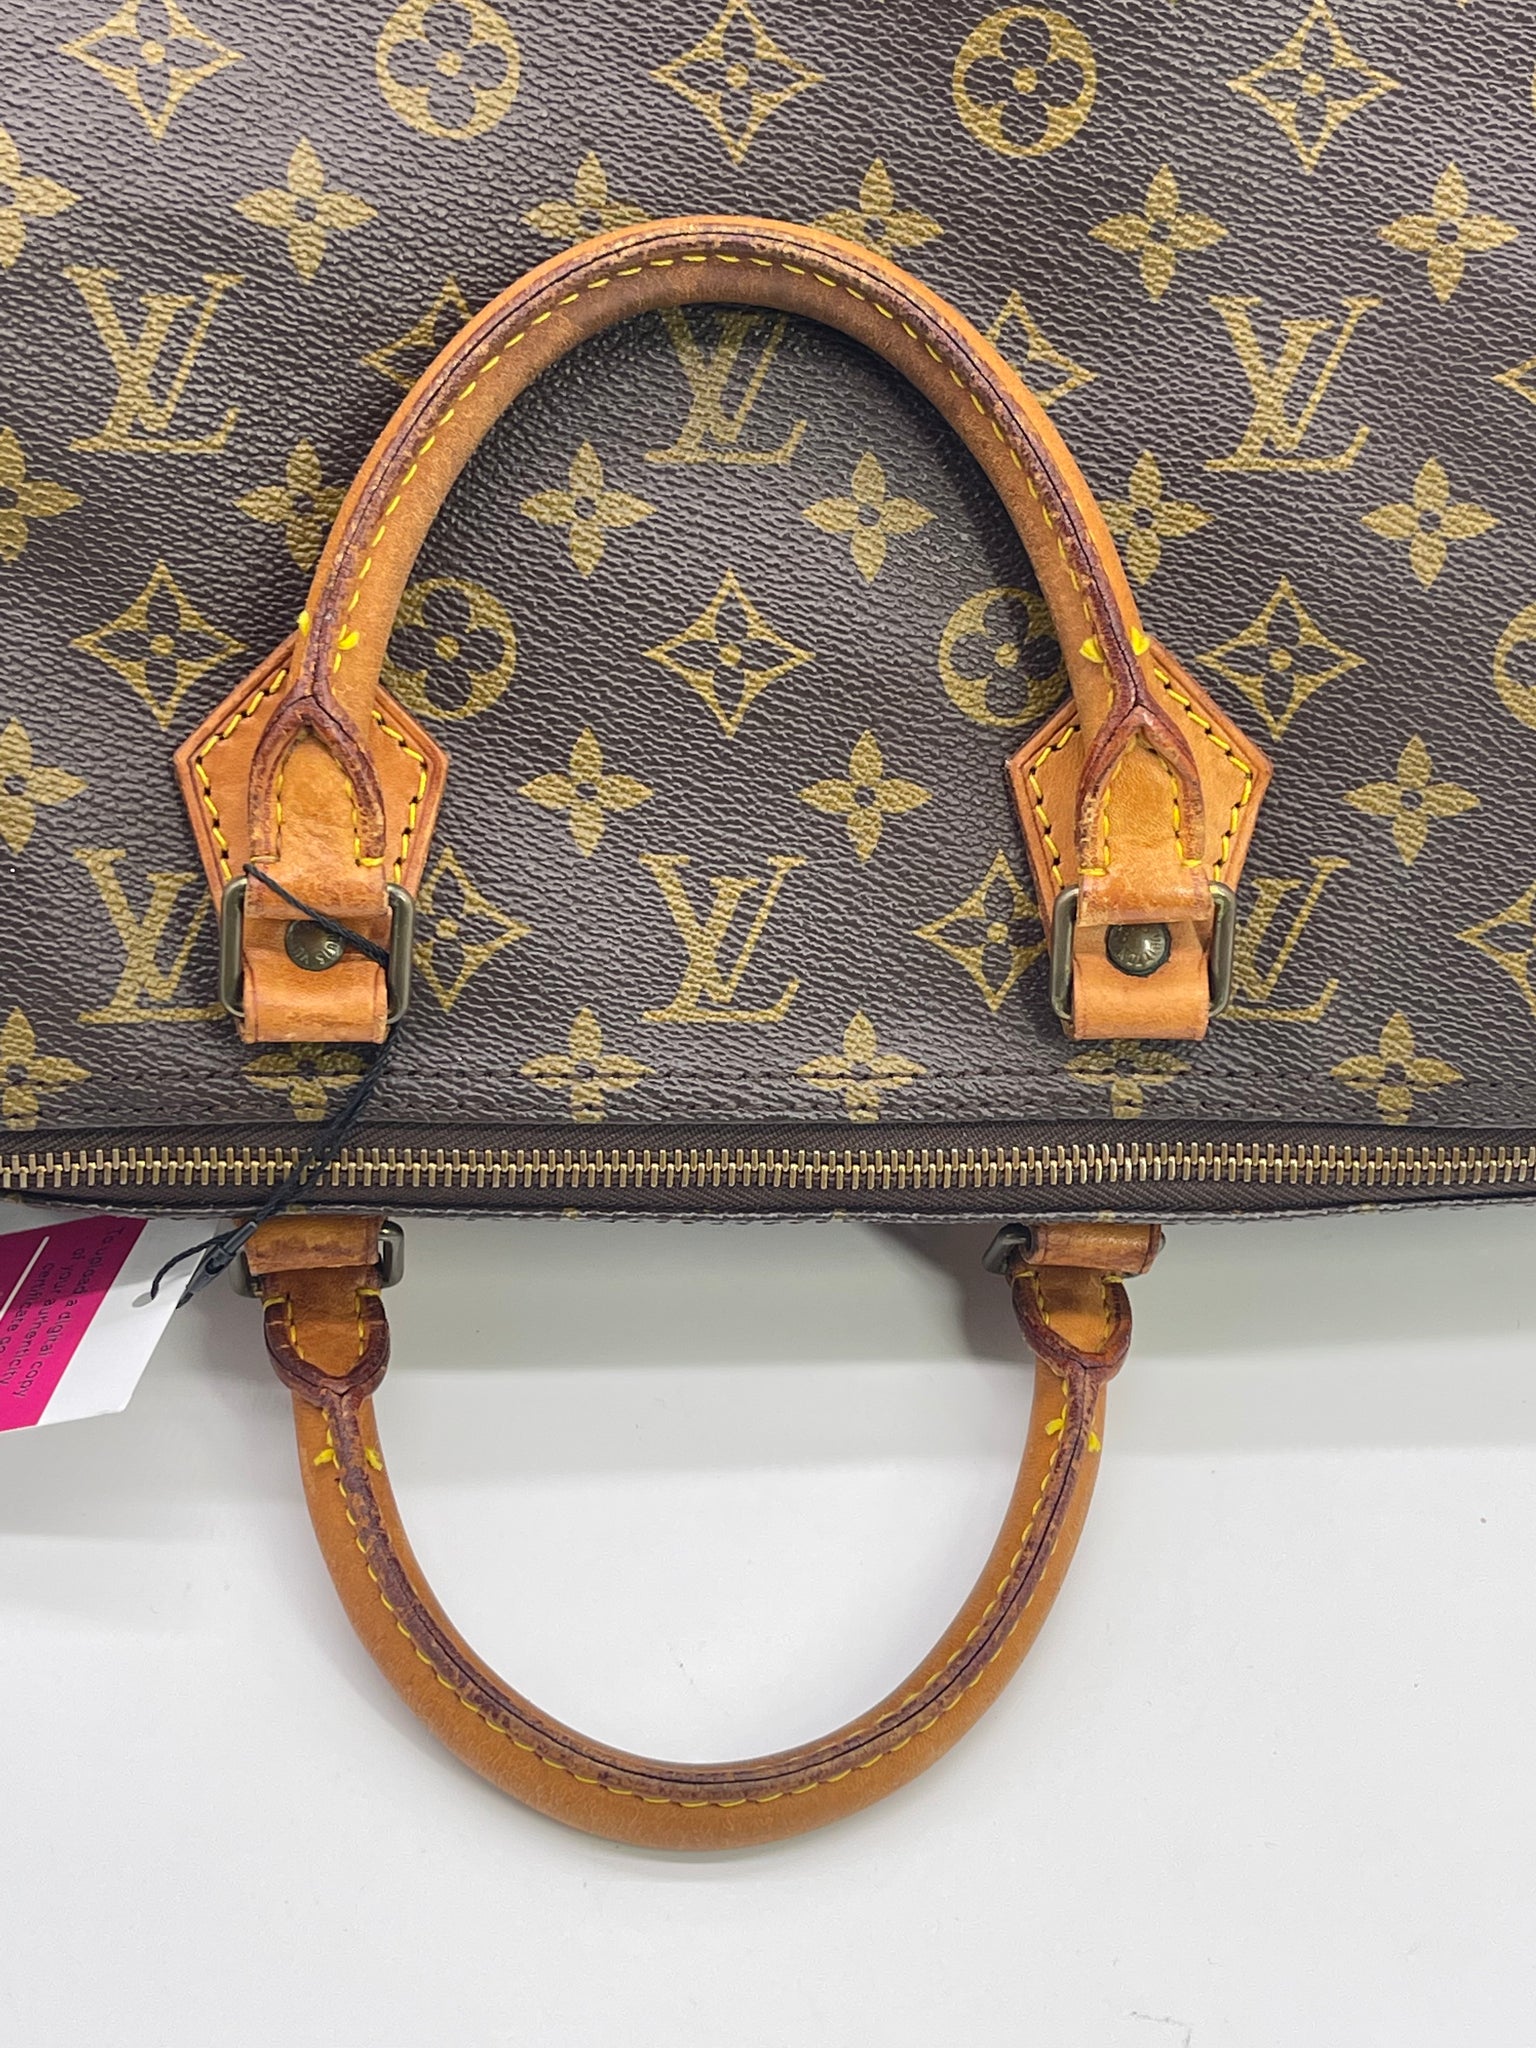 PRELOVED Louis Vuitton Monogram Speedy 40 Bag VI881 090722 – KimmieBBags LLC